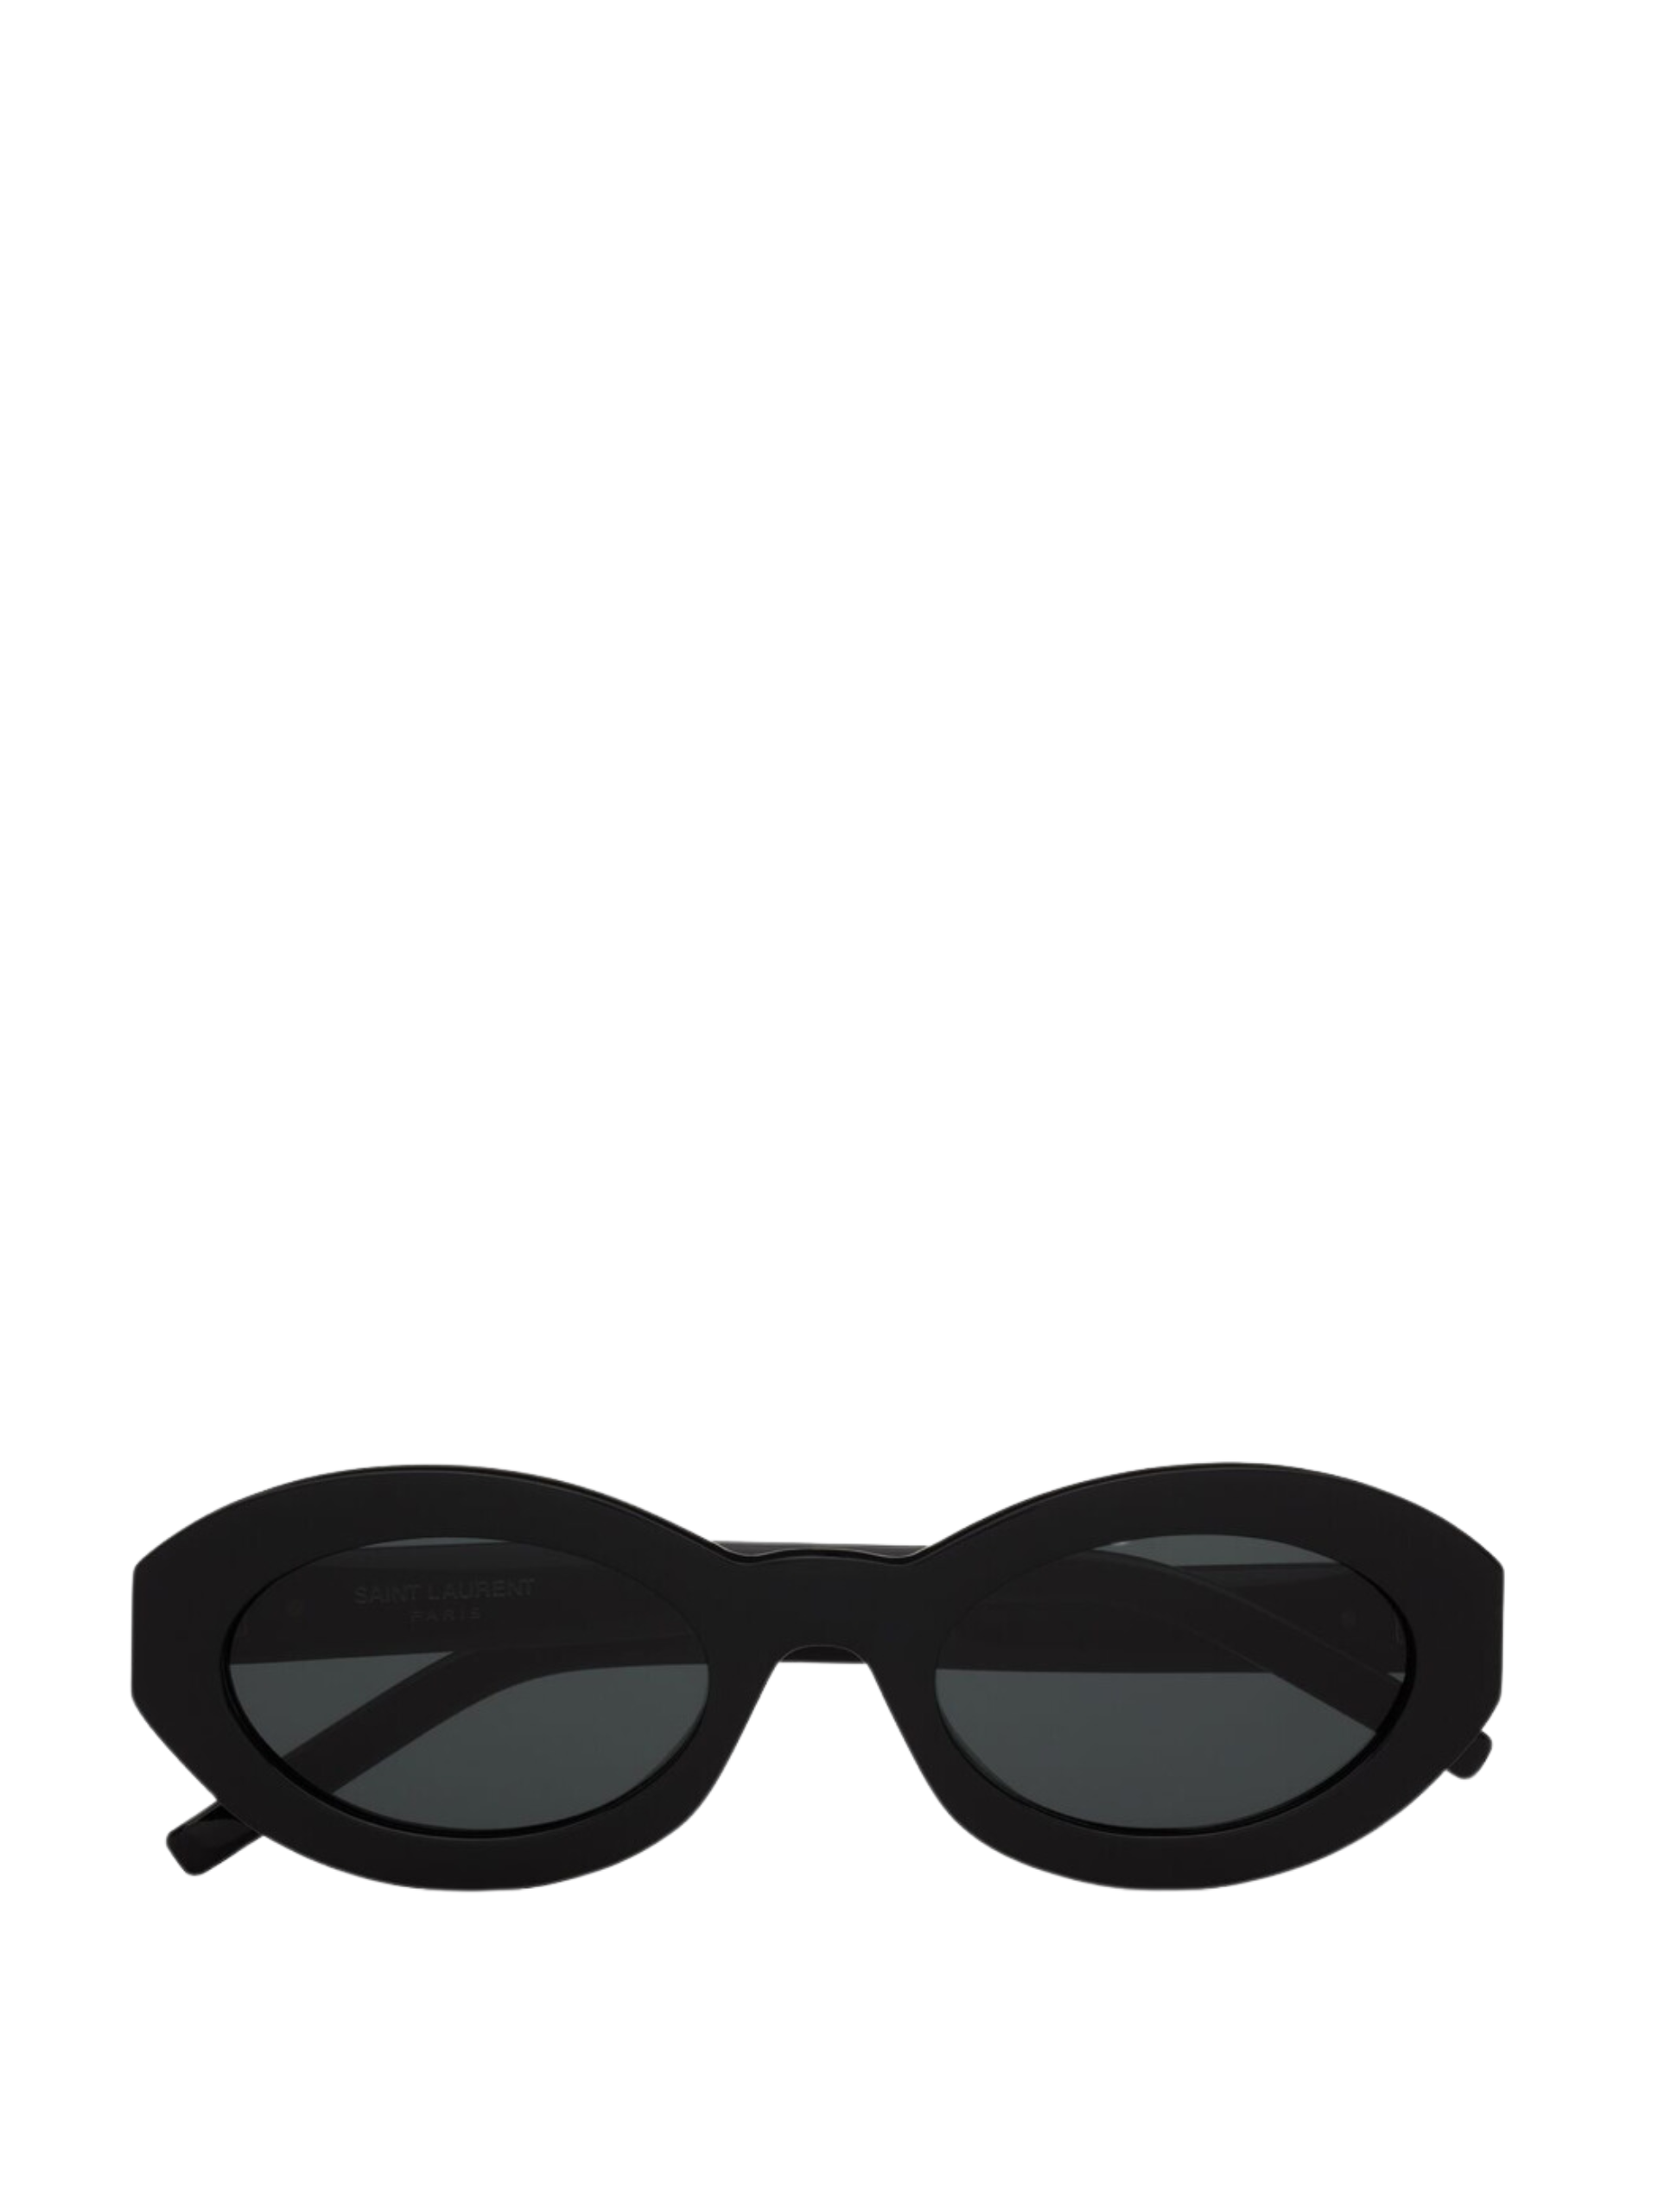 SAINT LAURENT SL M136 Sunglasses